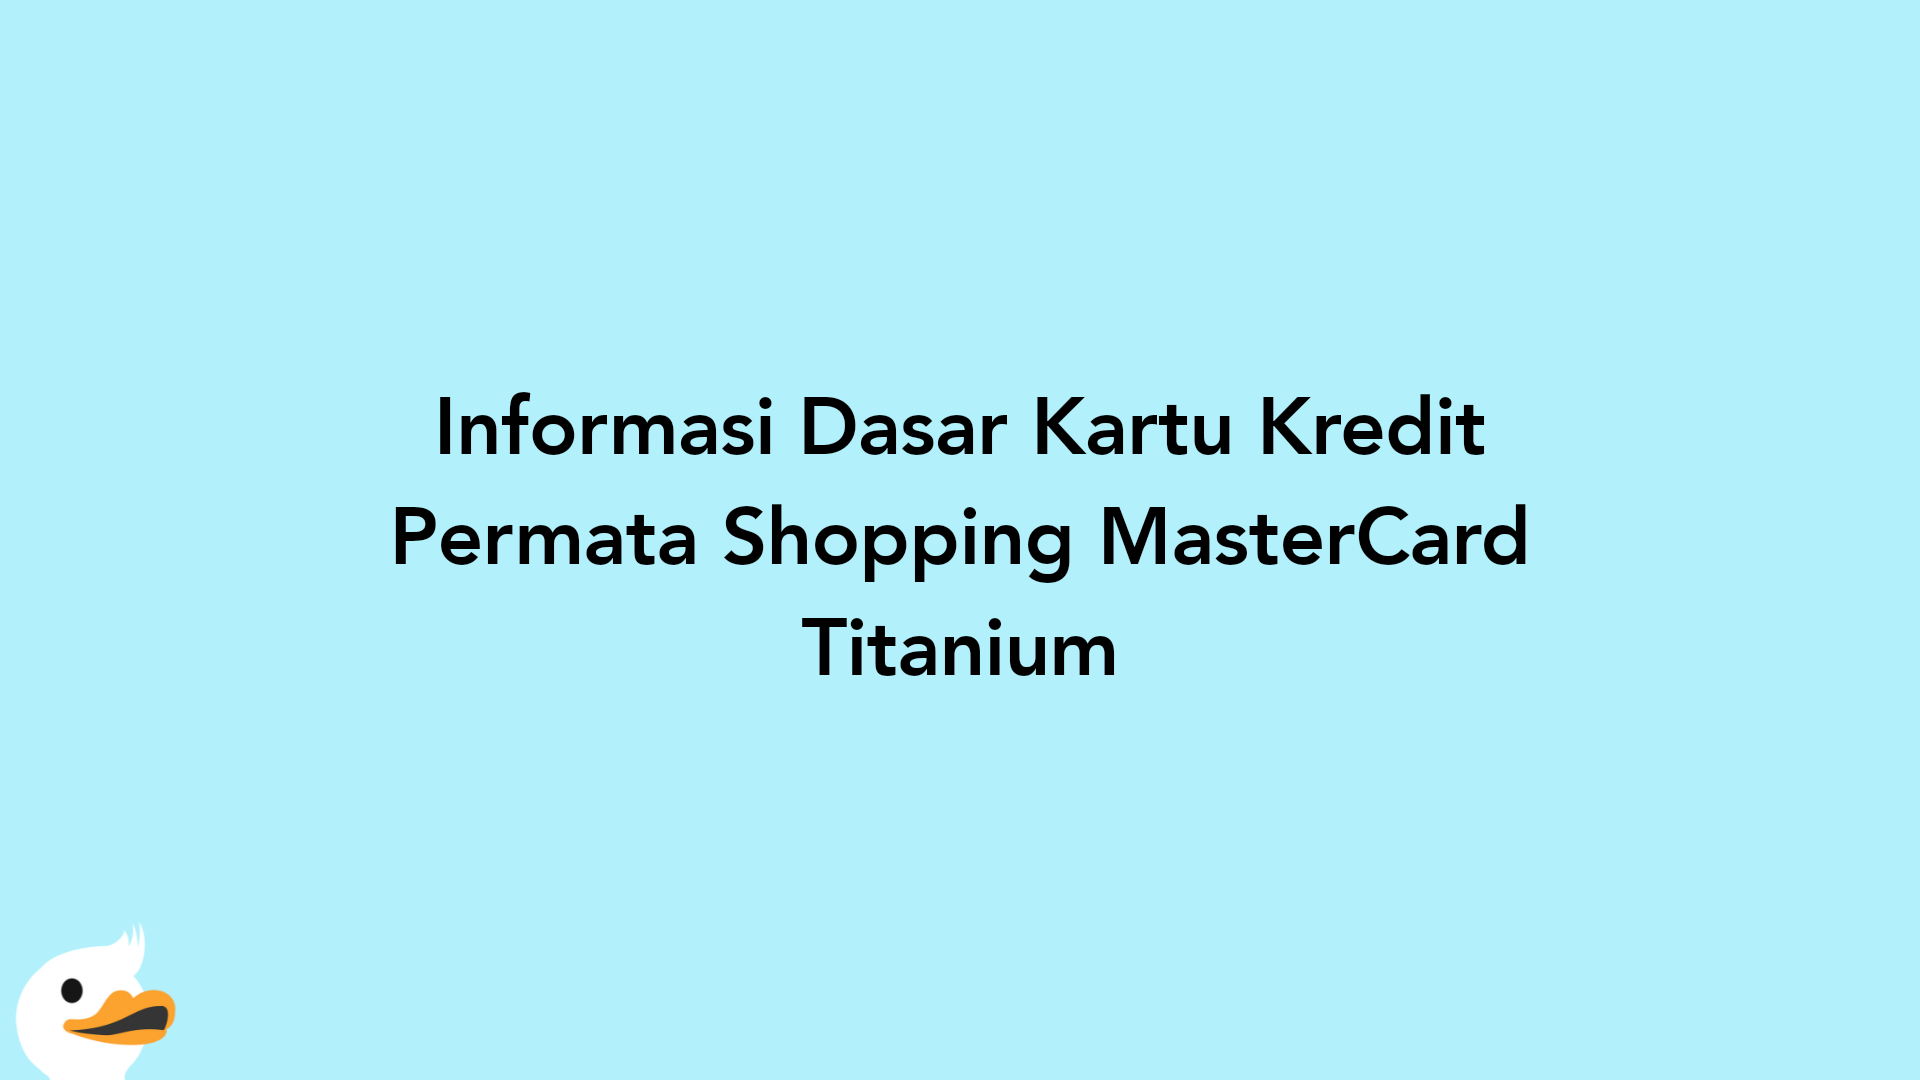 Informasi Dasar Kartu Kredit Permata Shopping MasterCard Titanium